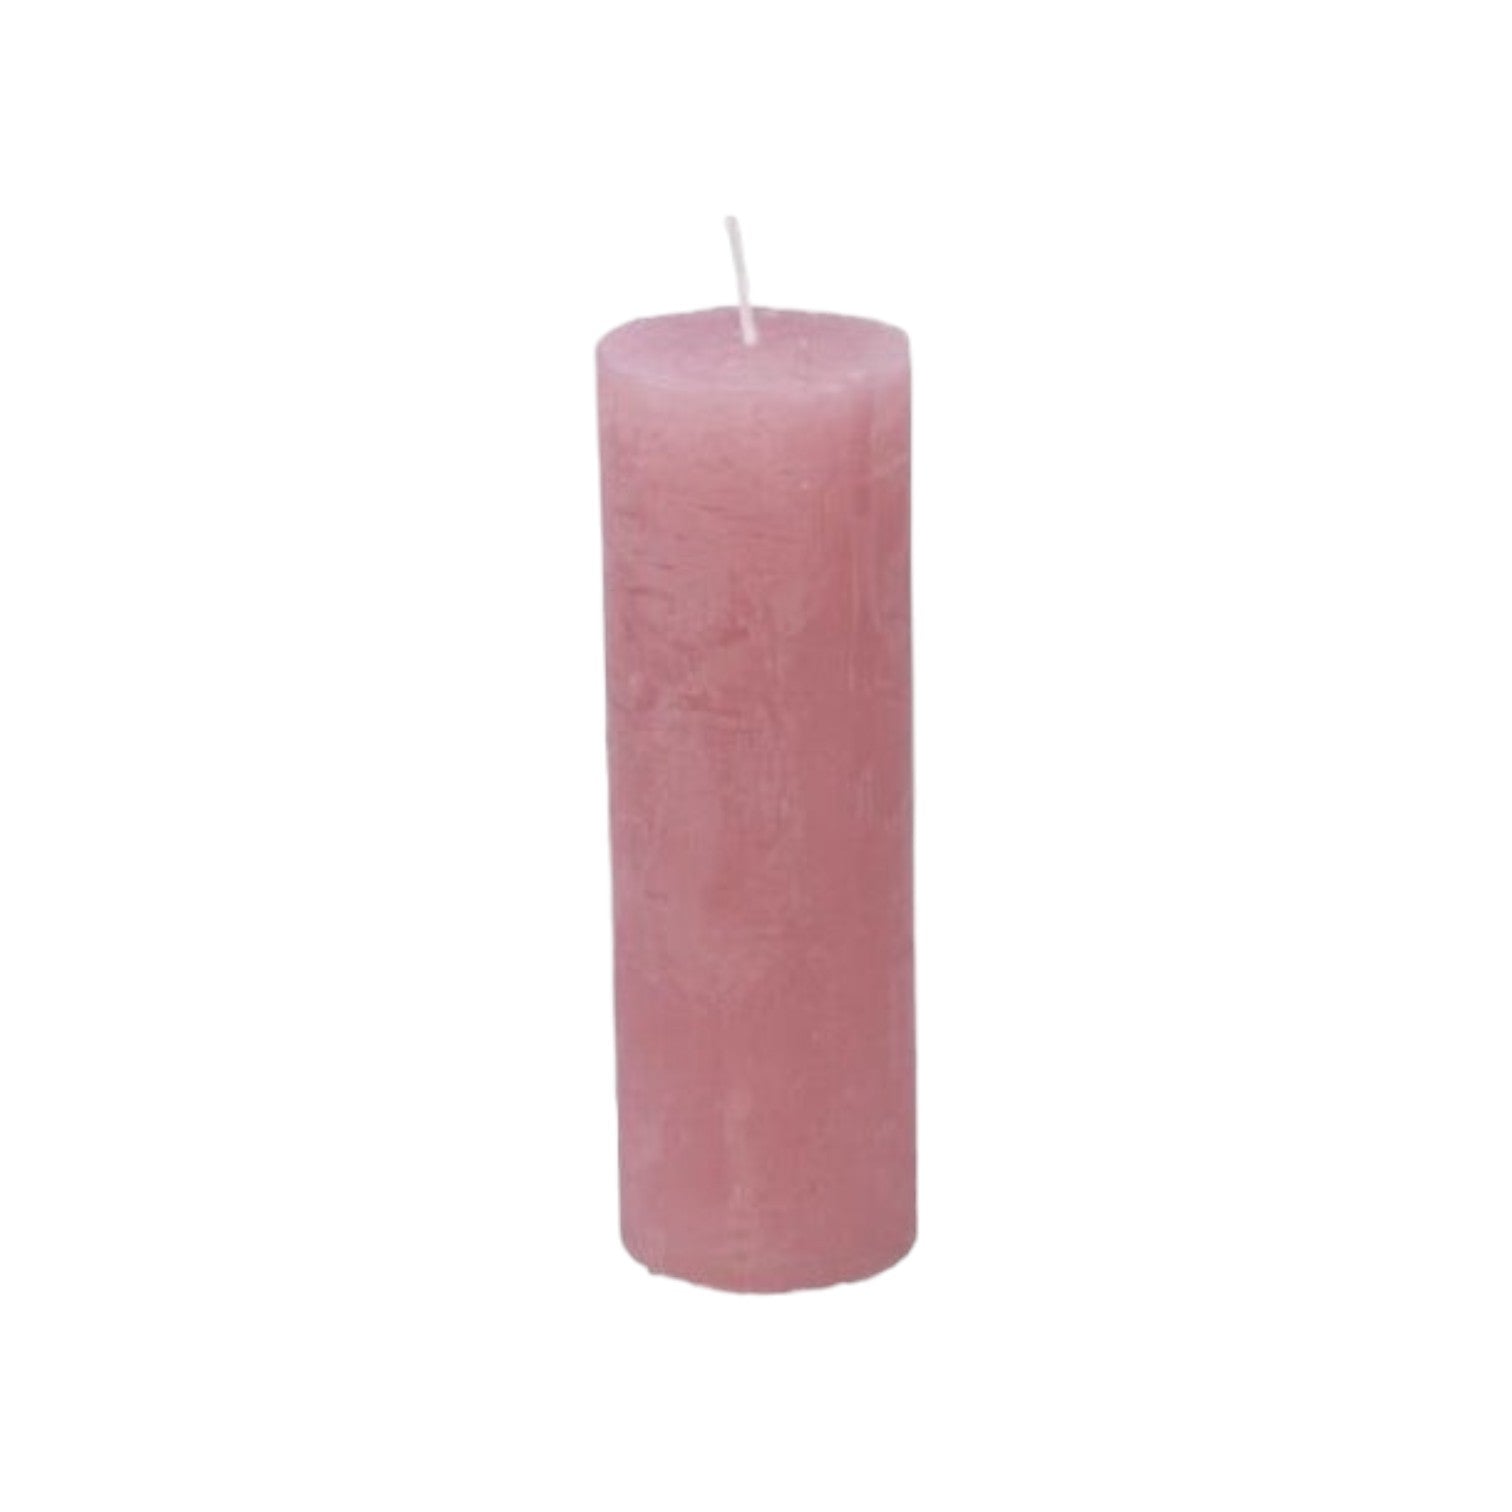 Branded By - Kaarsen 'Pillar' (Ø5cm x 15cm) - Antique Pink (set van 9)